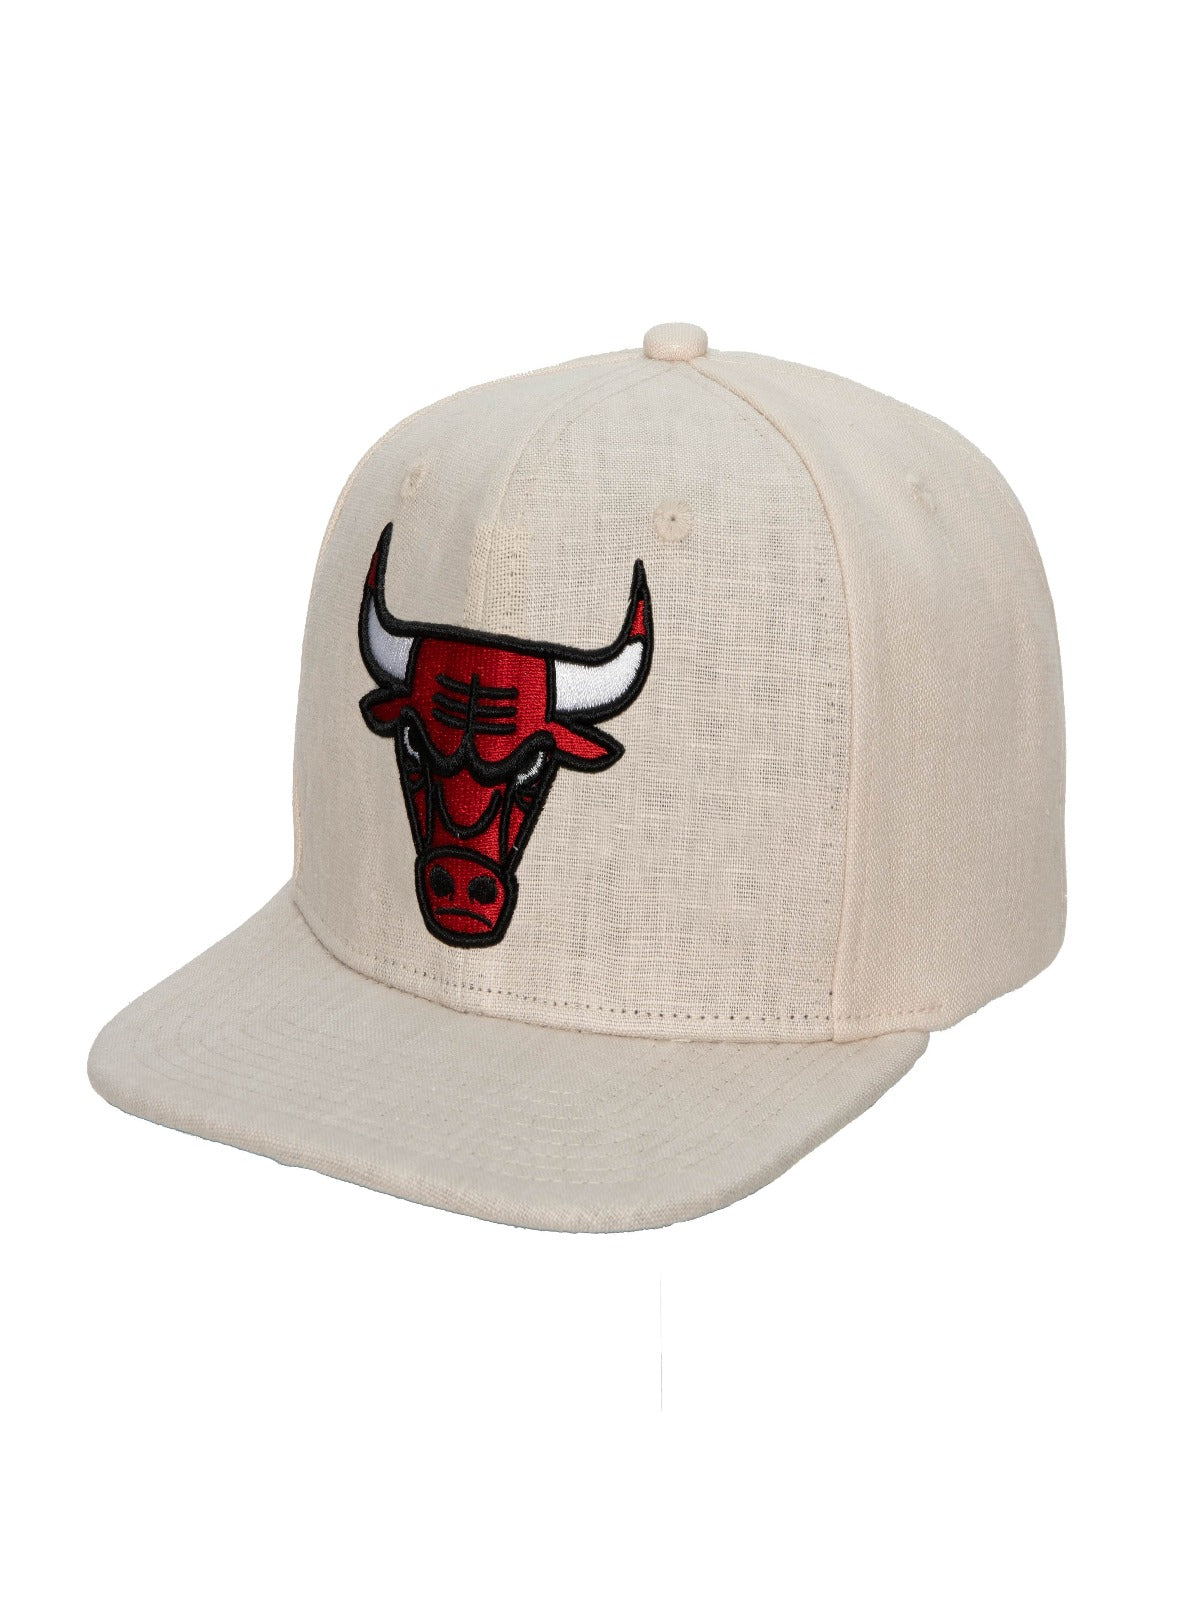 Mitchell & Ness Chicago Bulls Off White Trucker Snapback Hat Black